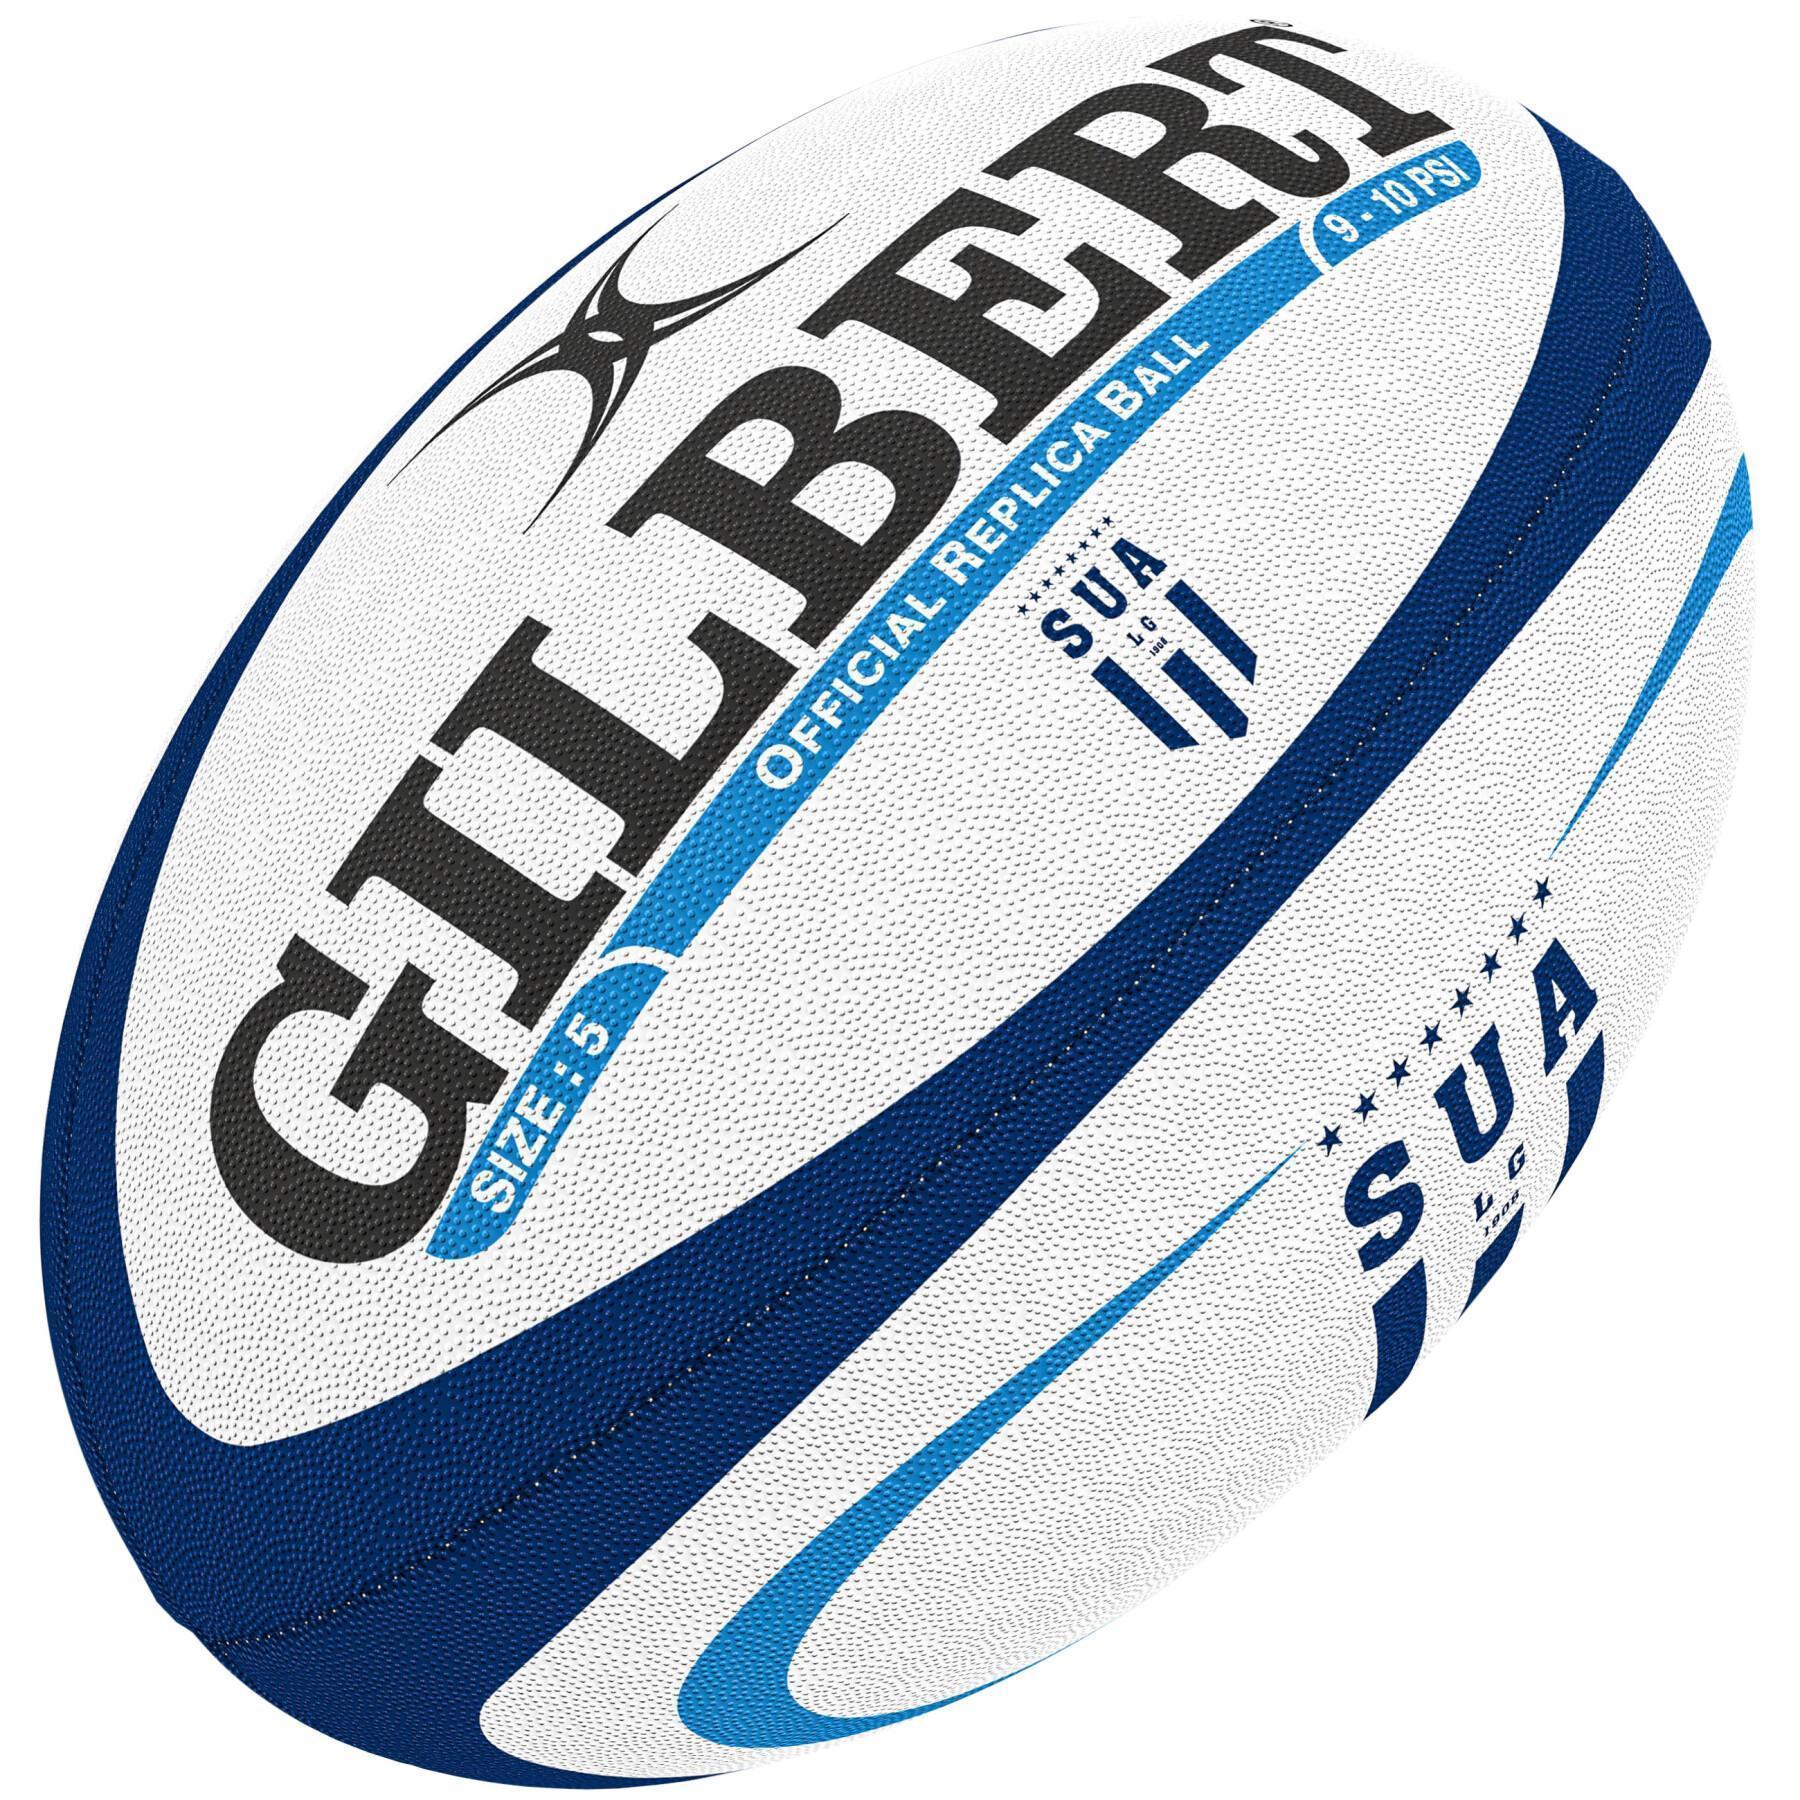 Ballon de rugby SU Agen